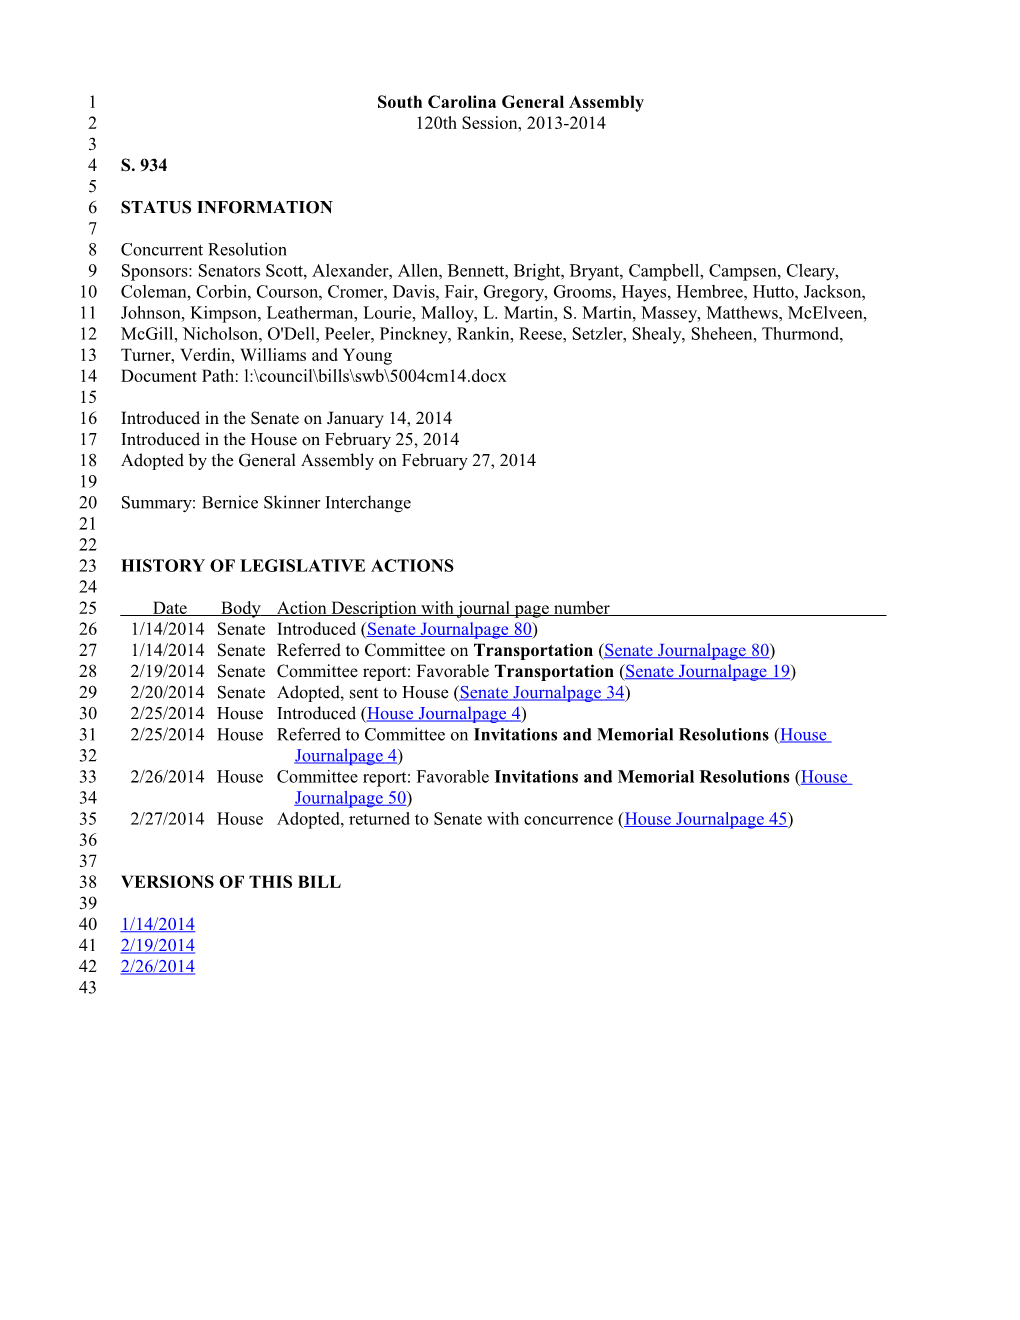 2013-2014 Bill 934: Bernice Skinner Interchange - South Carolina Legislature Online